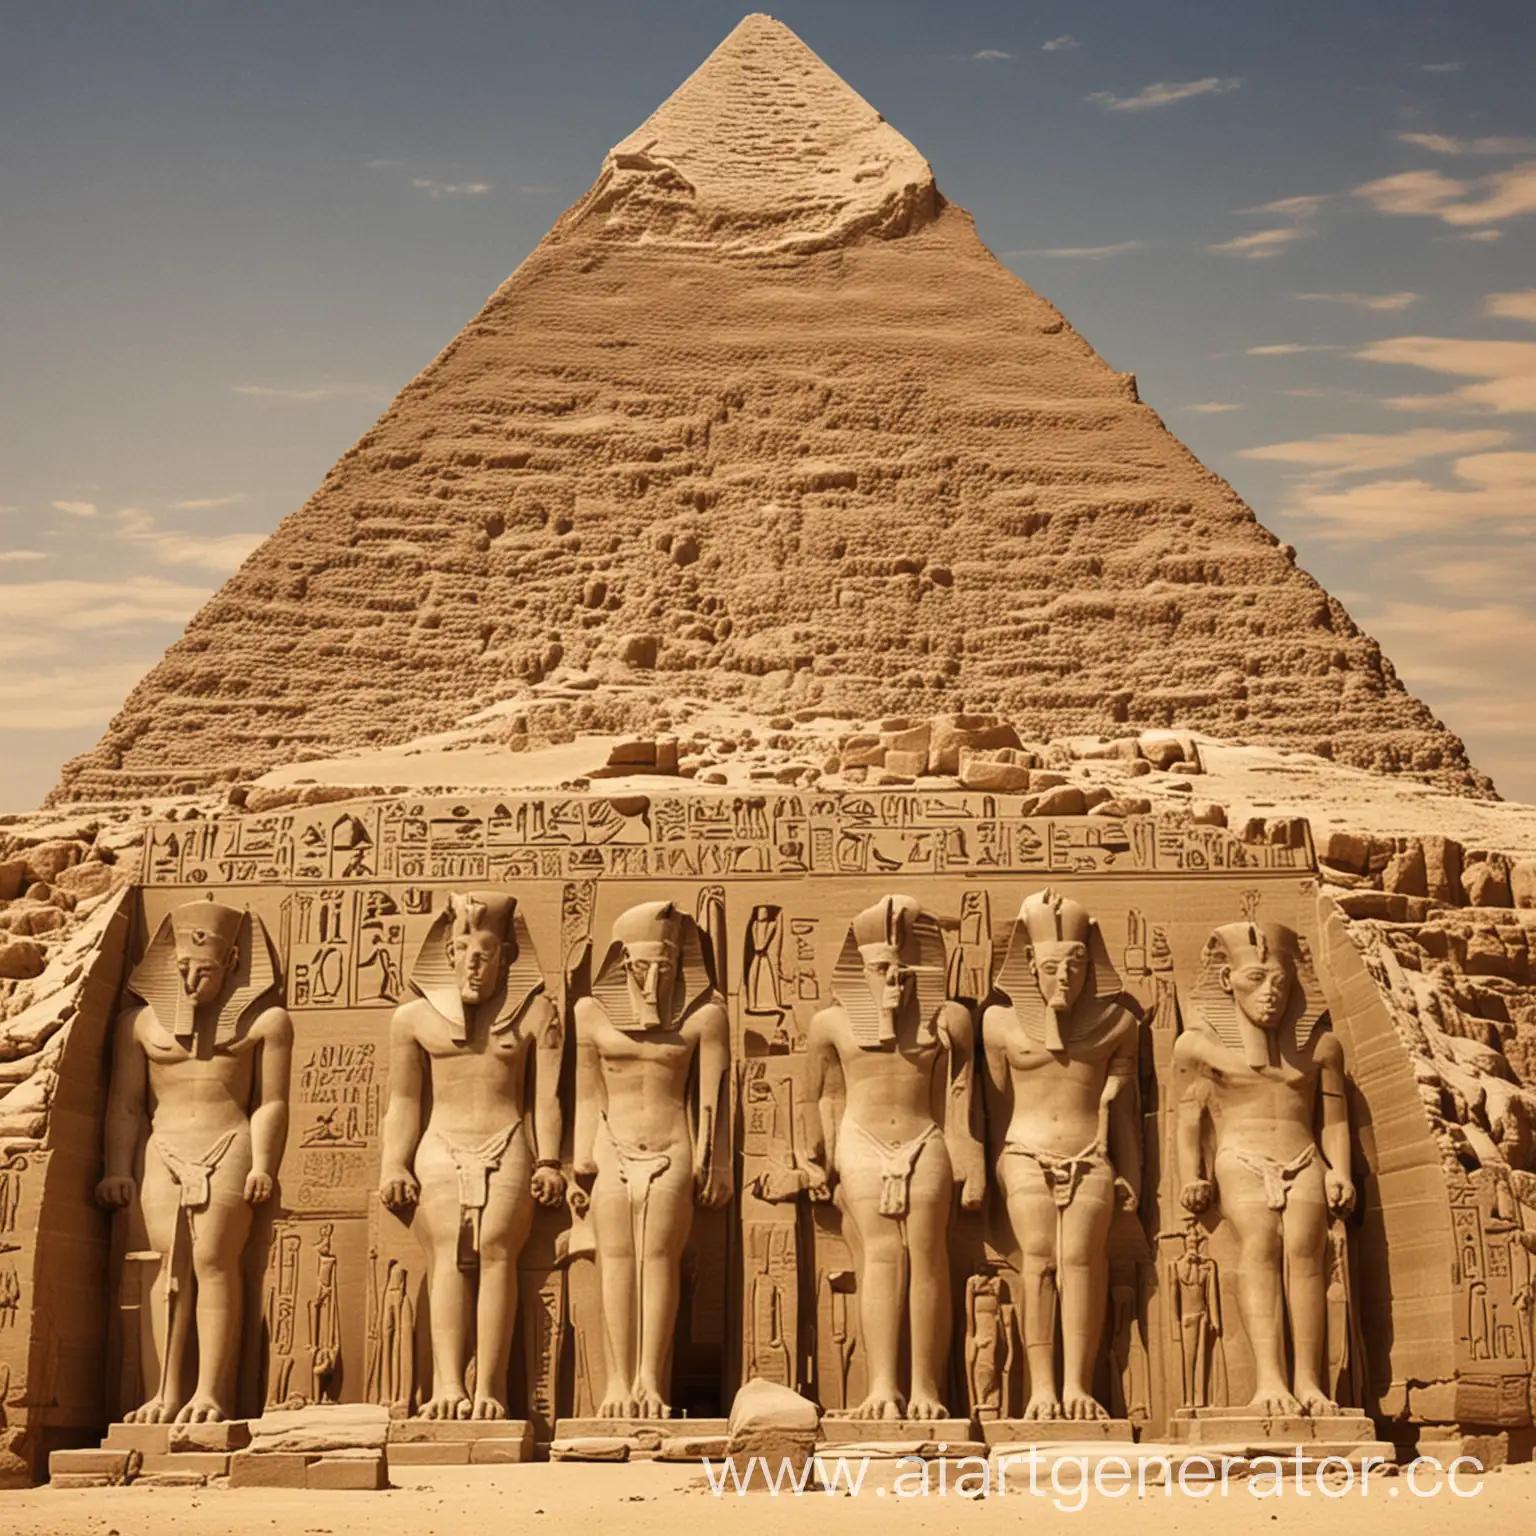 Exploring-PseudoScientific-Theories-of-Ancient-Egypt-Through-Art